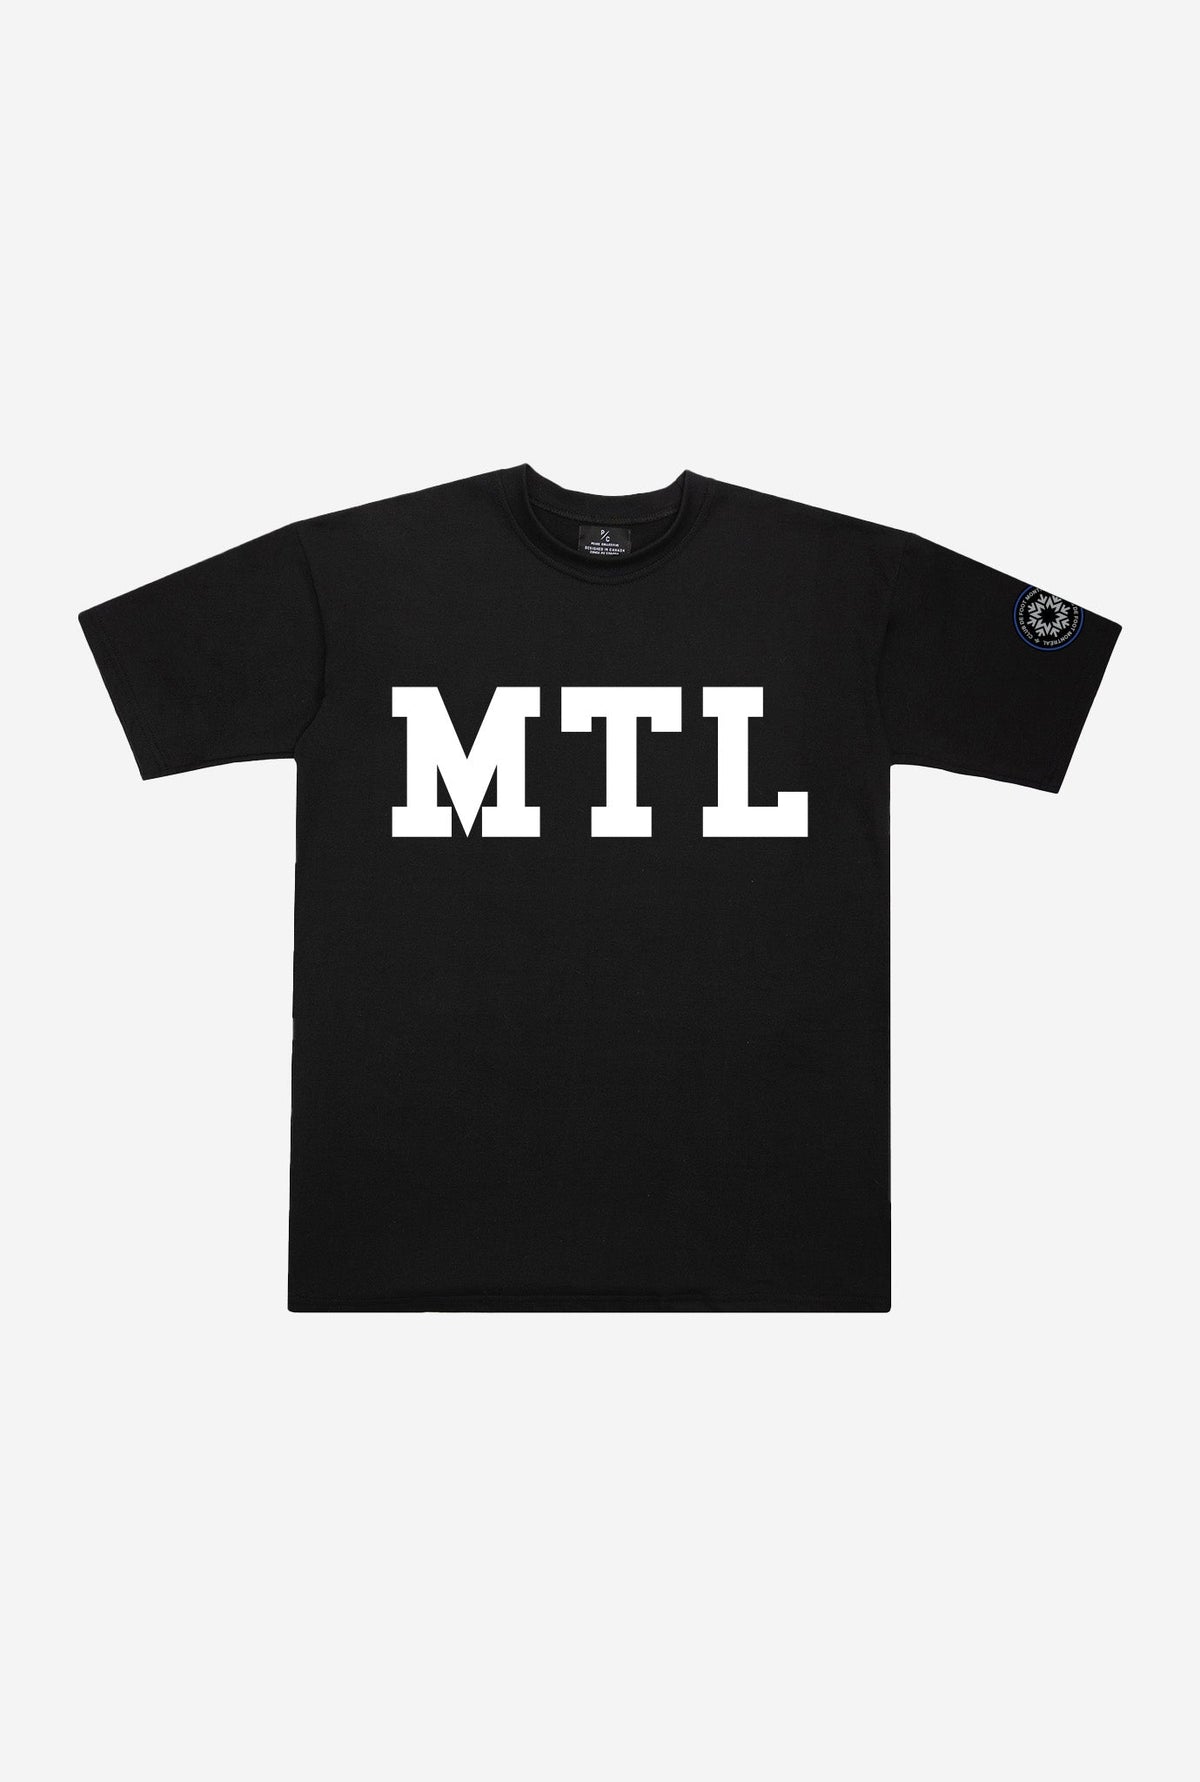 CF Montreal "MTL" Heavyweight T-Shirt - Black